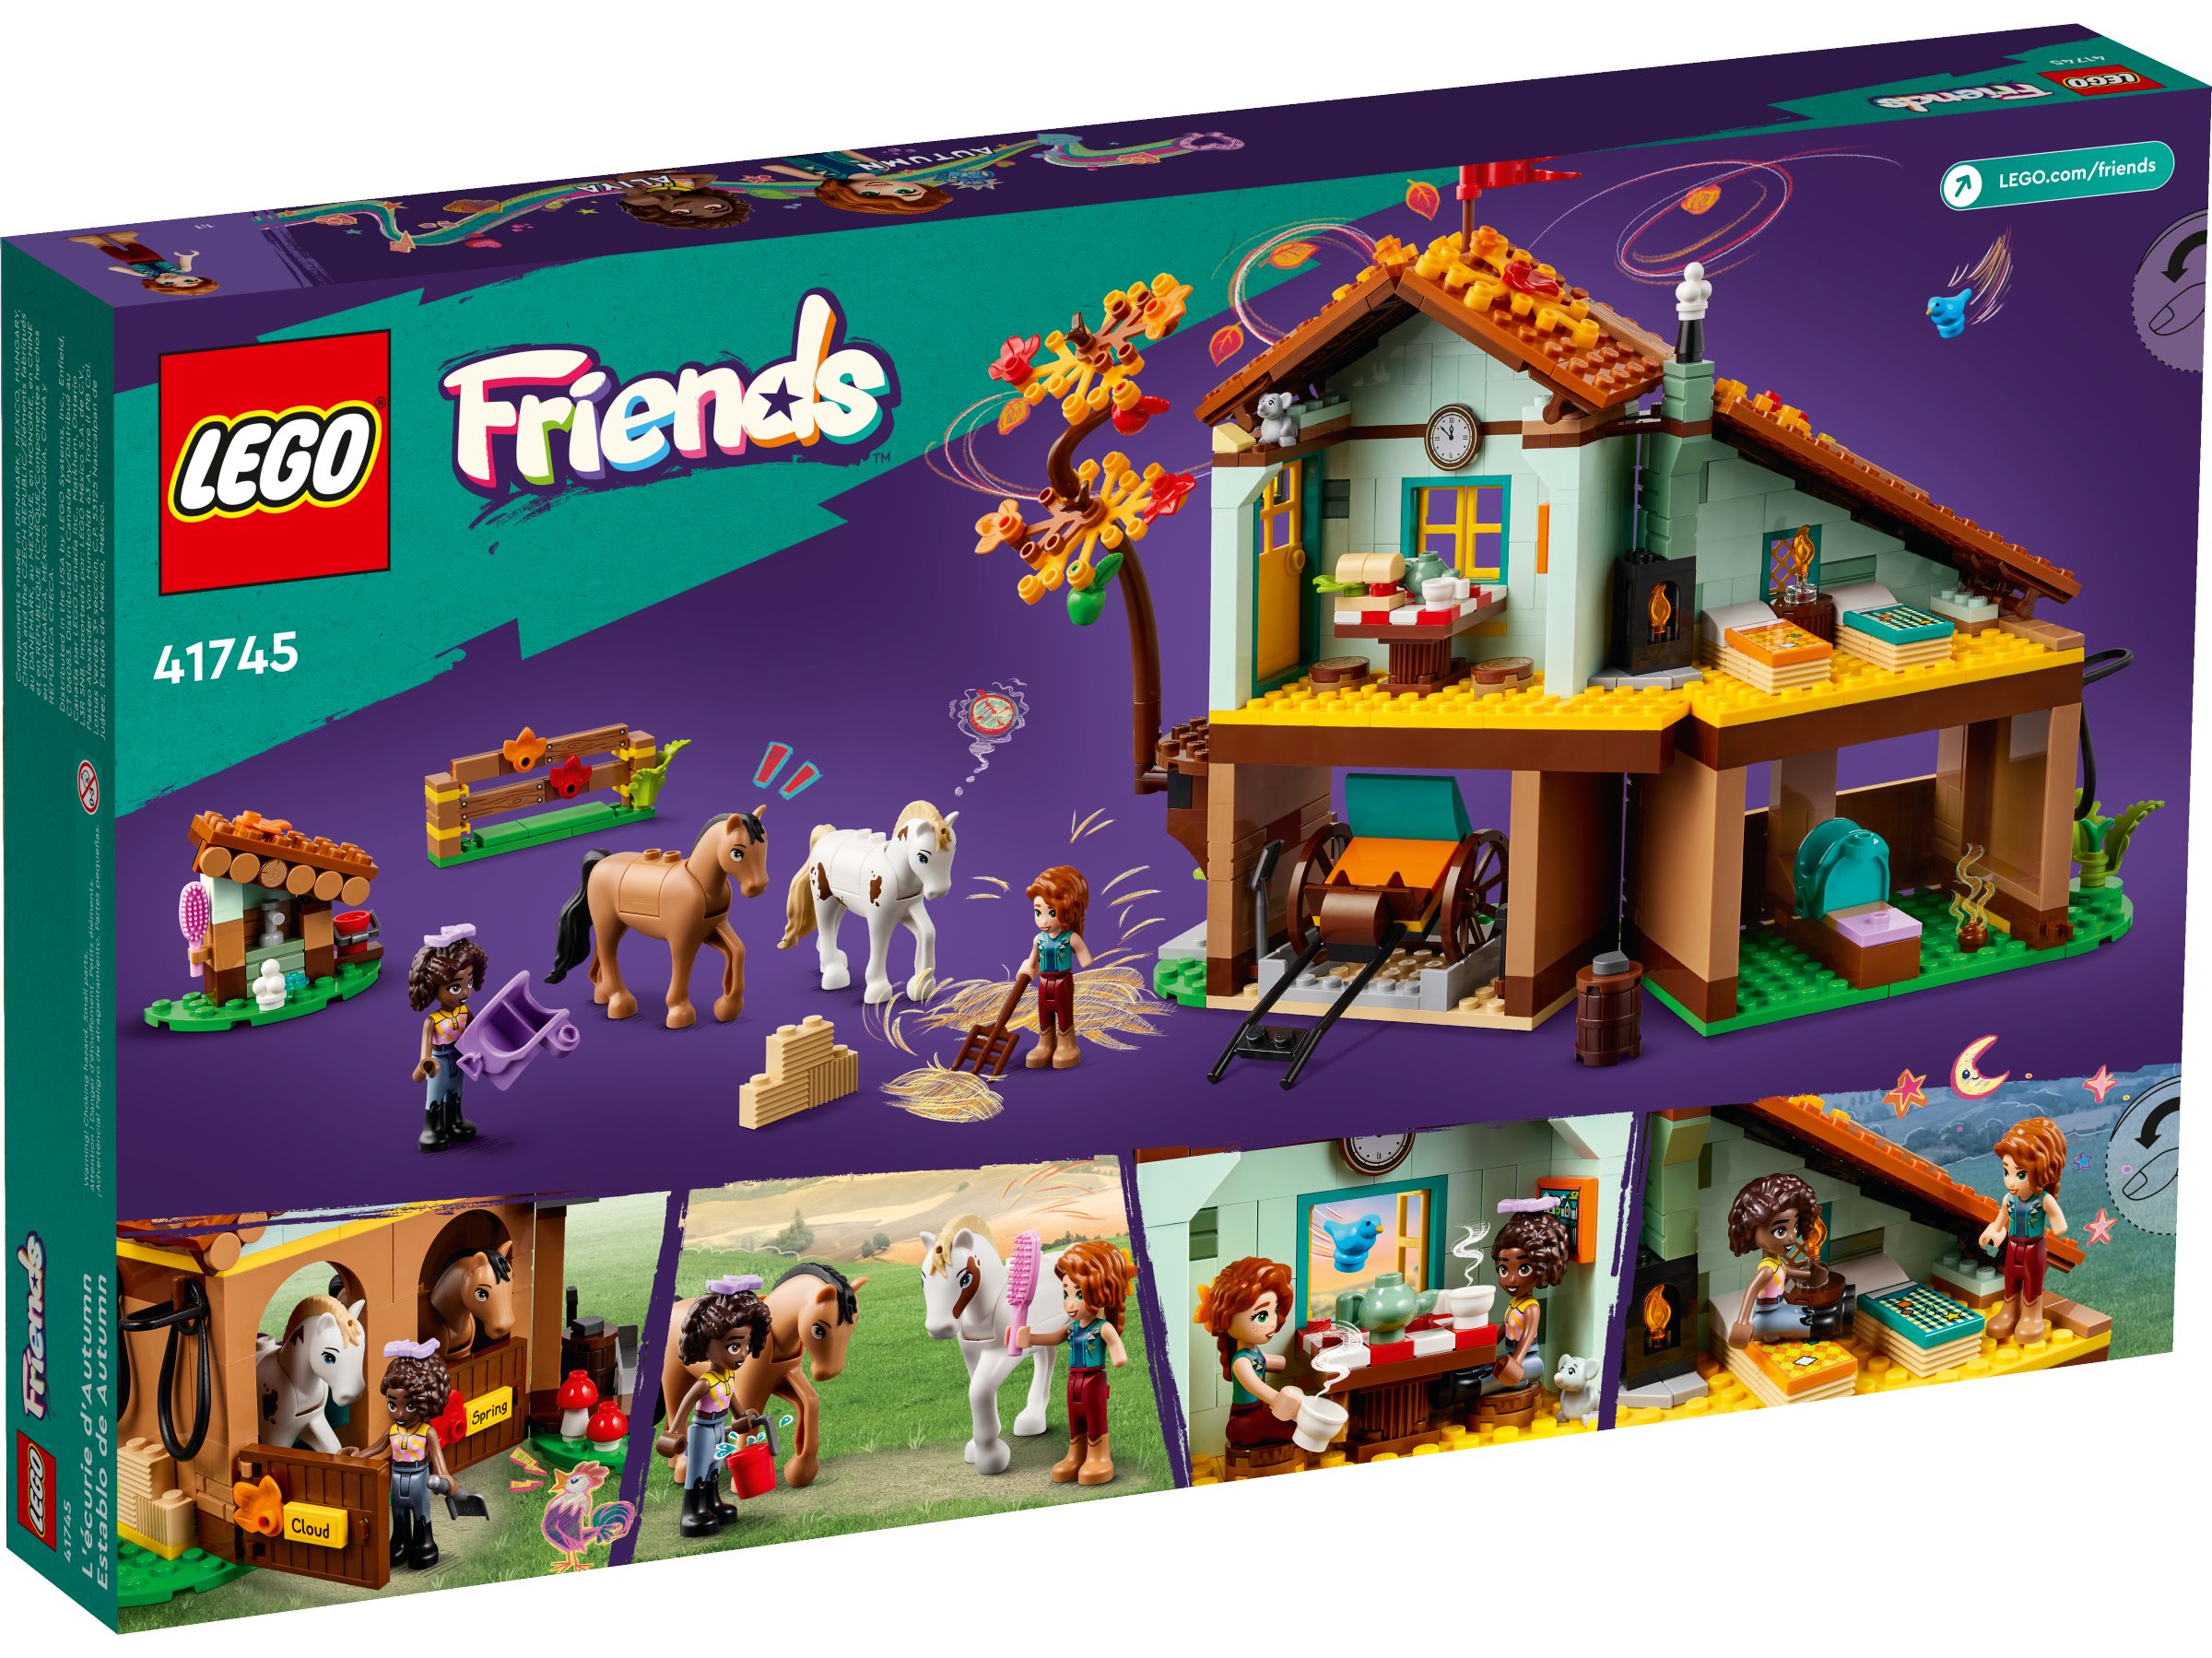 LEGO Friends 41745 Autumns Reitstall LEGO_41745_alt8.jpg